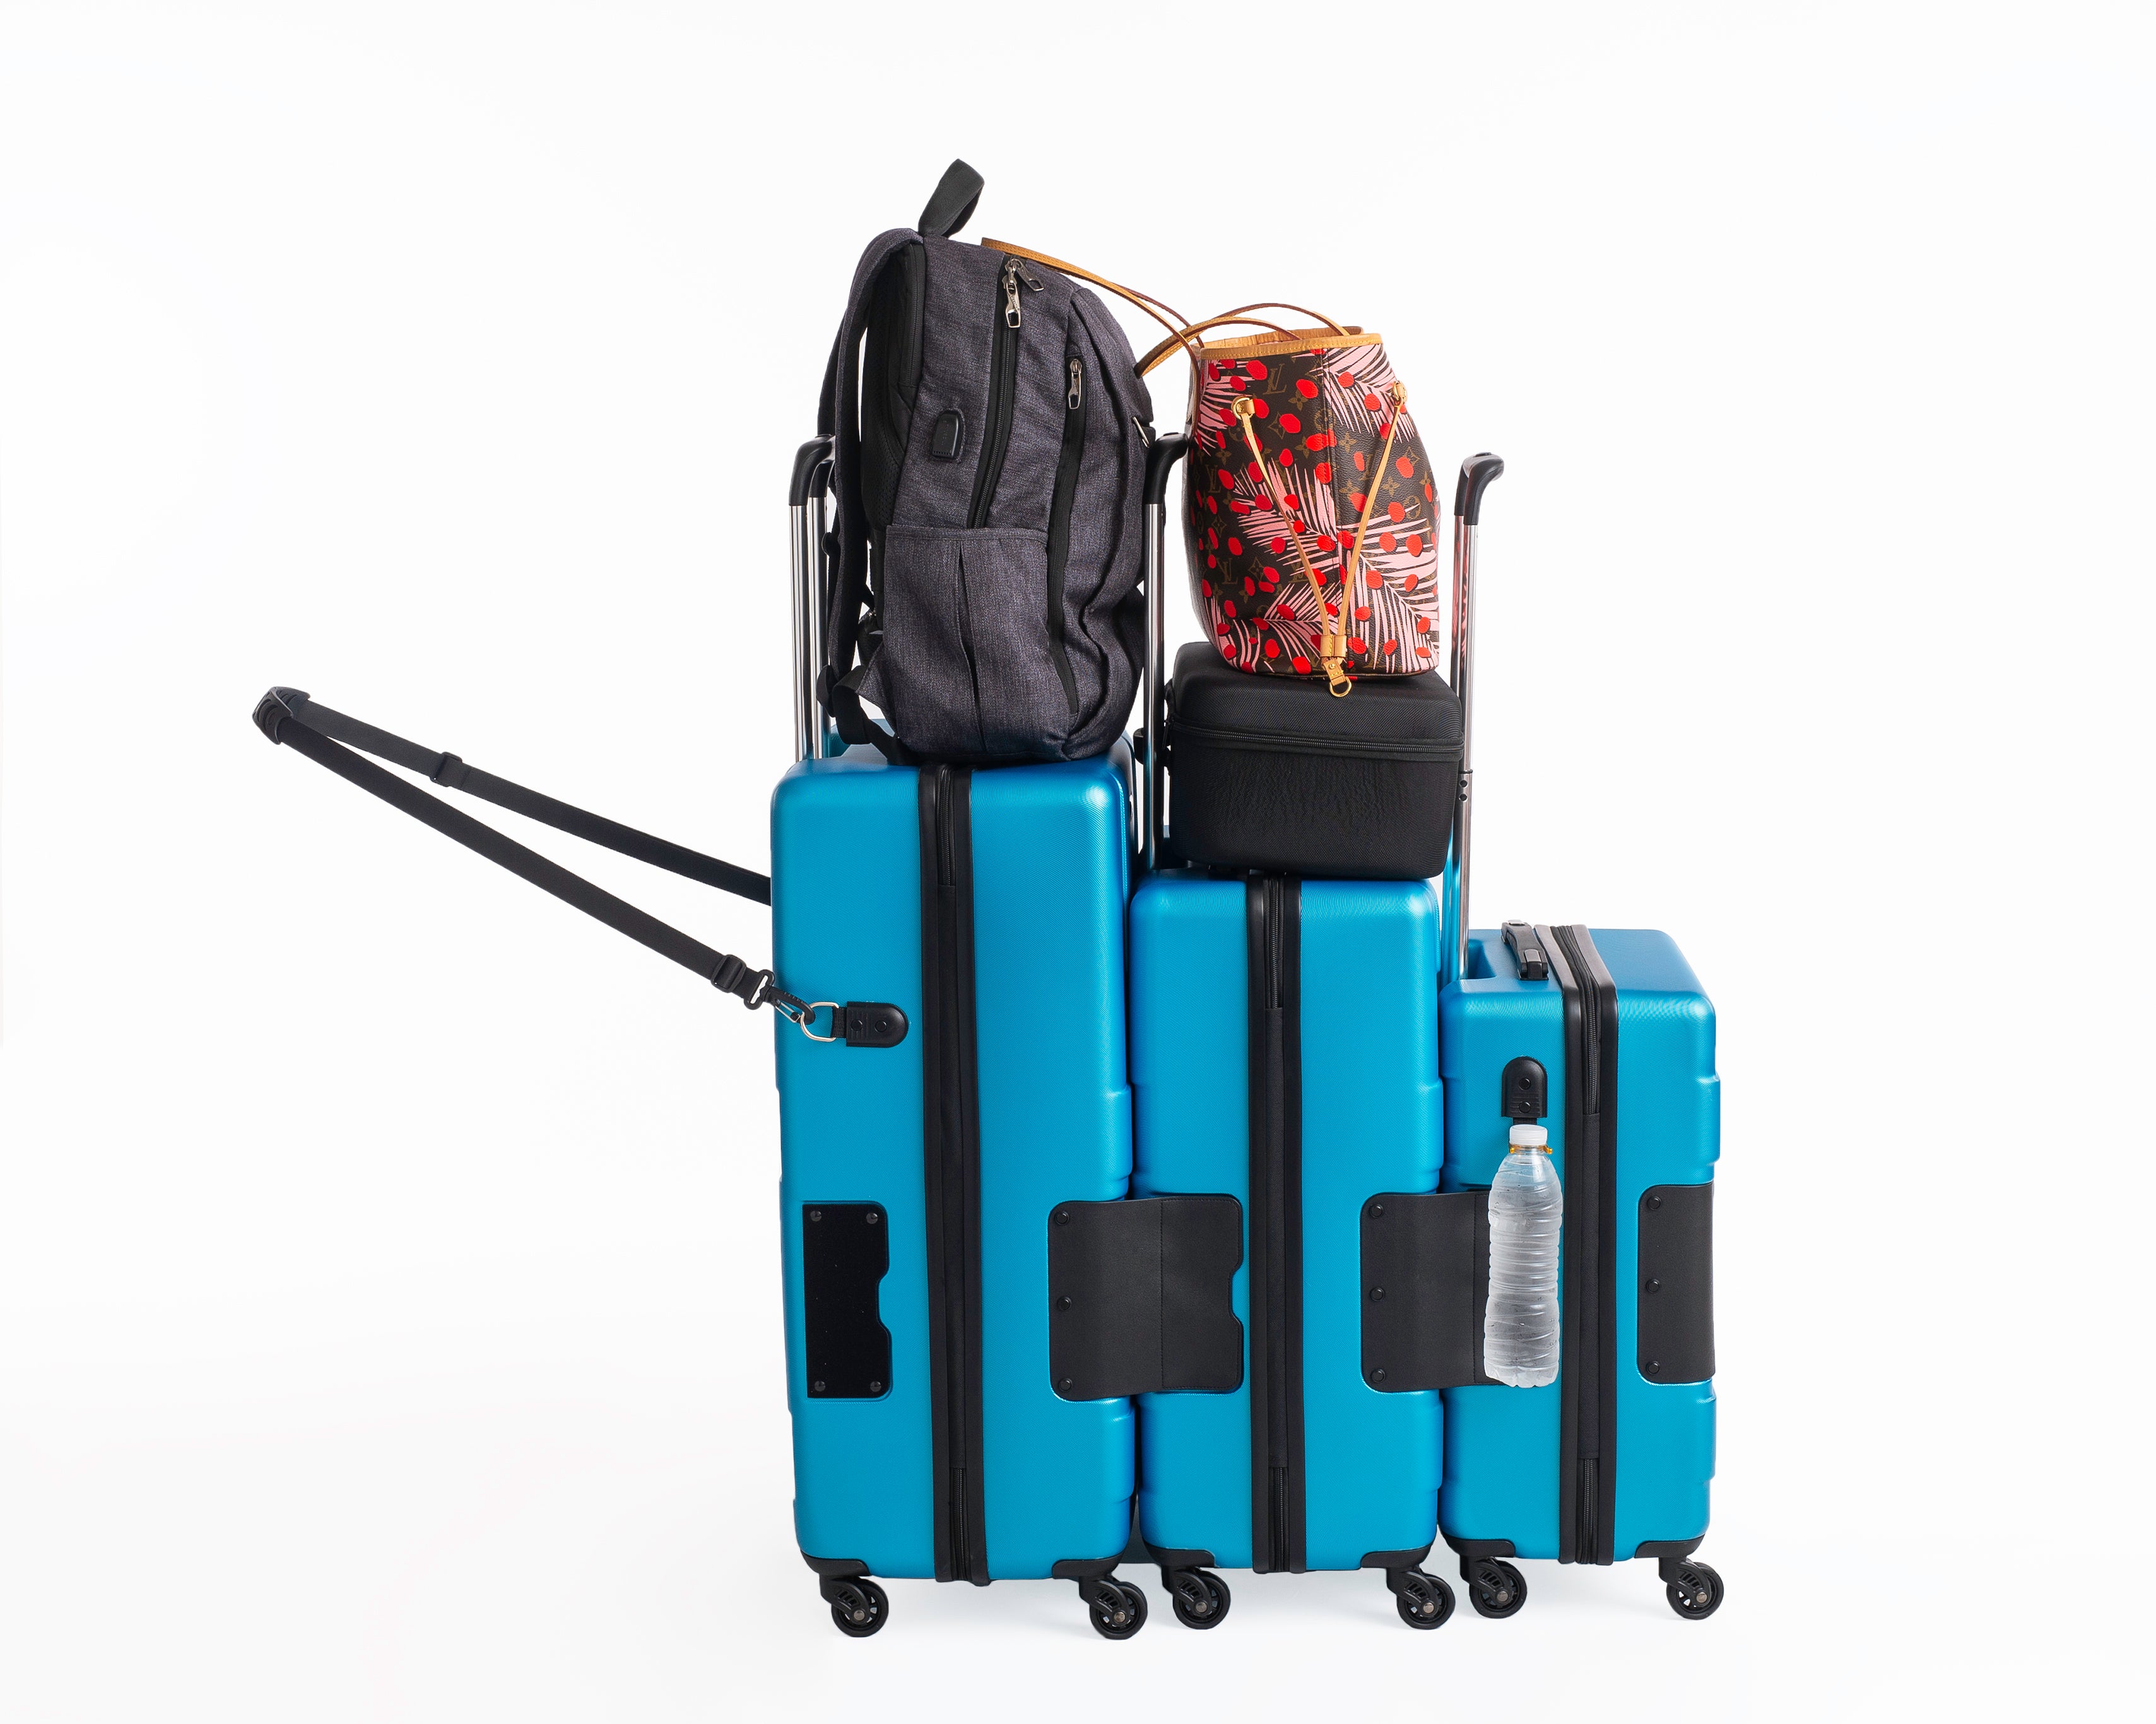 American Tourister Luggage Bags | VistaPrint